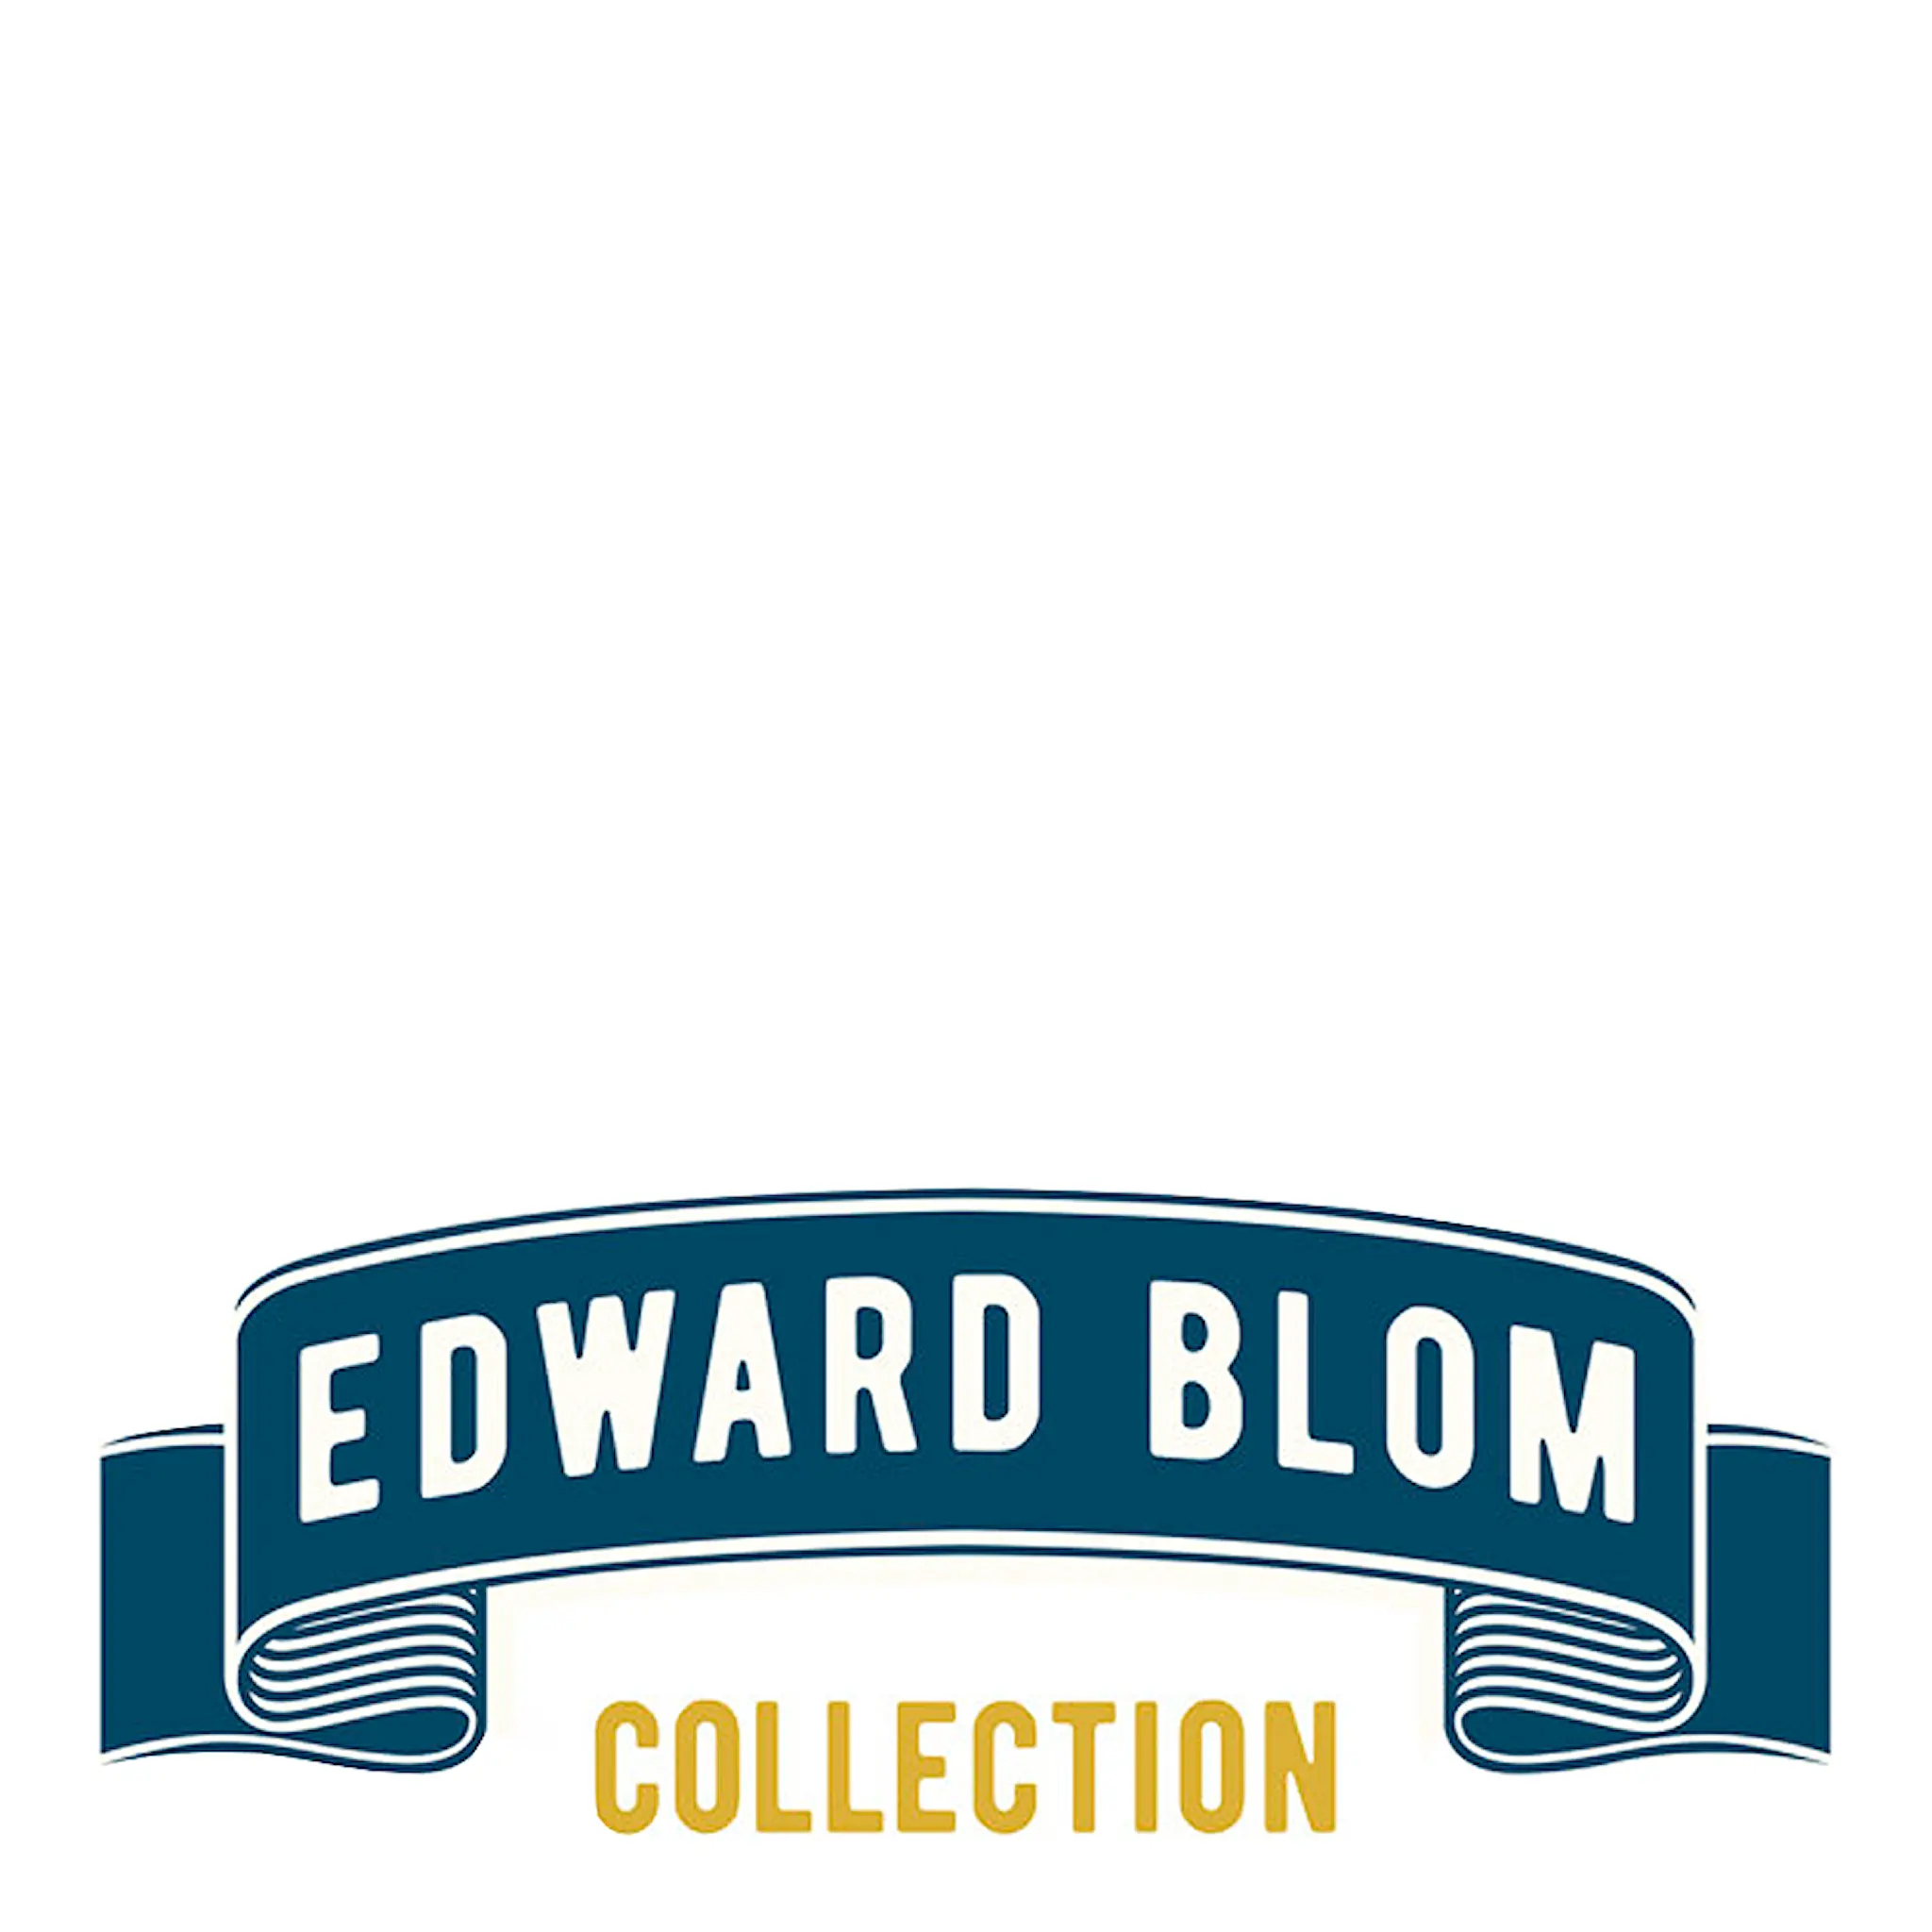 Edward Blom Collection Olutlasi Nro. 3